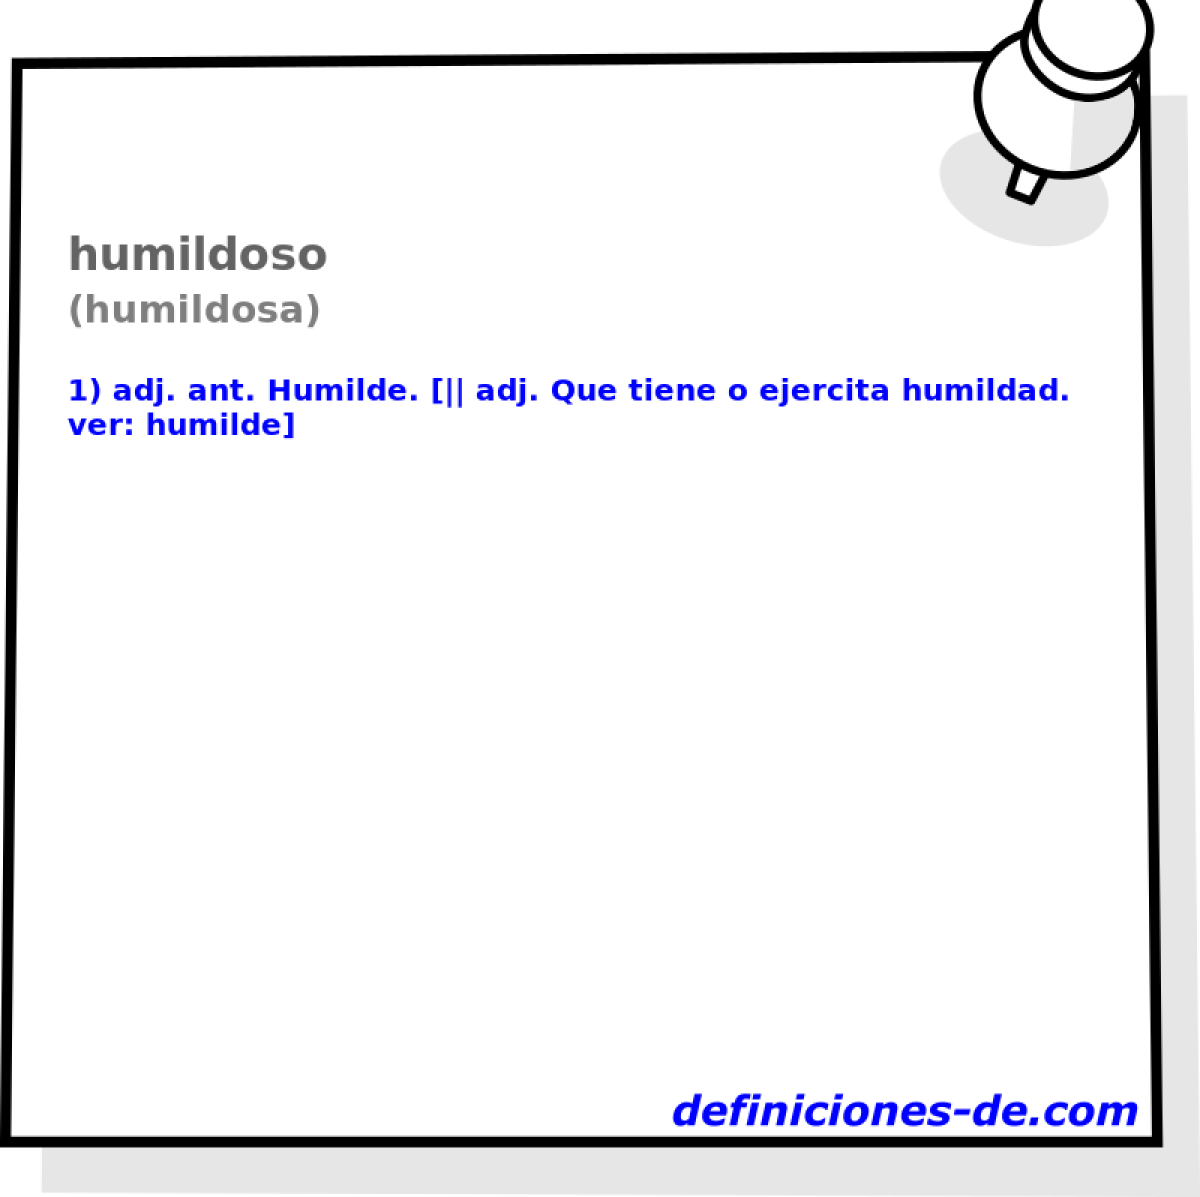 humildoso (humildosa)